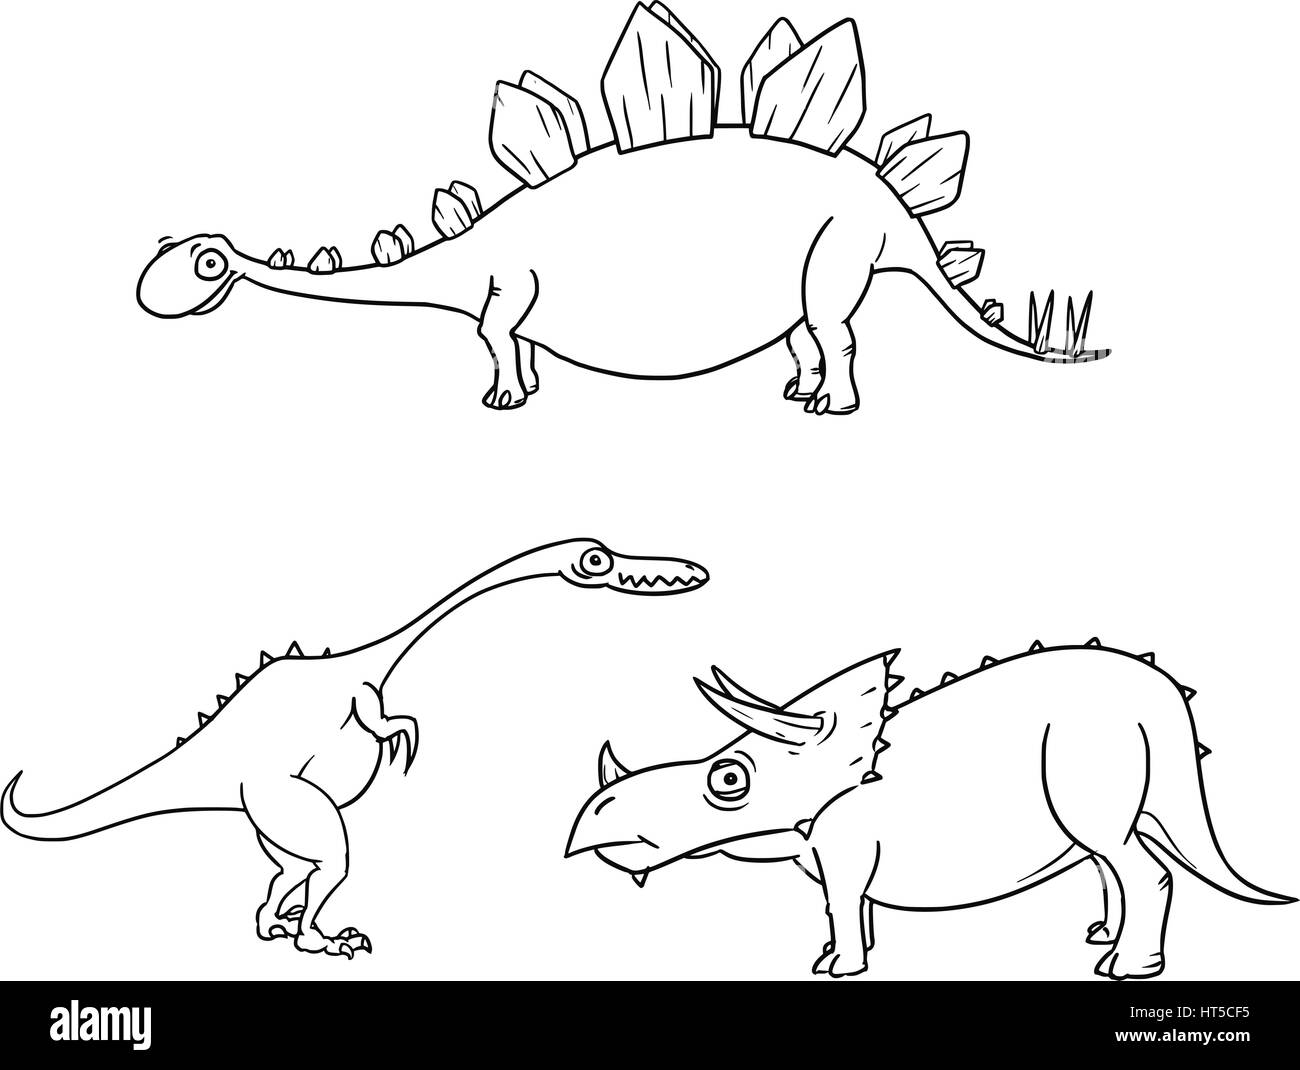 Vector Cartoon Set 04 of ancient dinosaur monster - Stegosaurus,Triceratops,Coelophysis Stock Vector